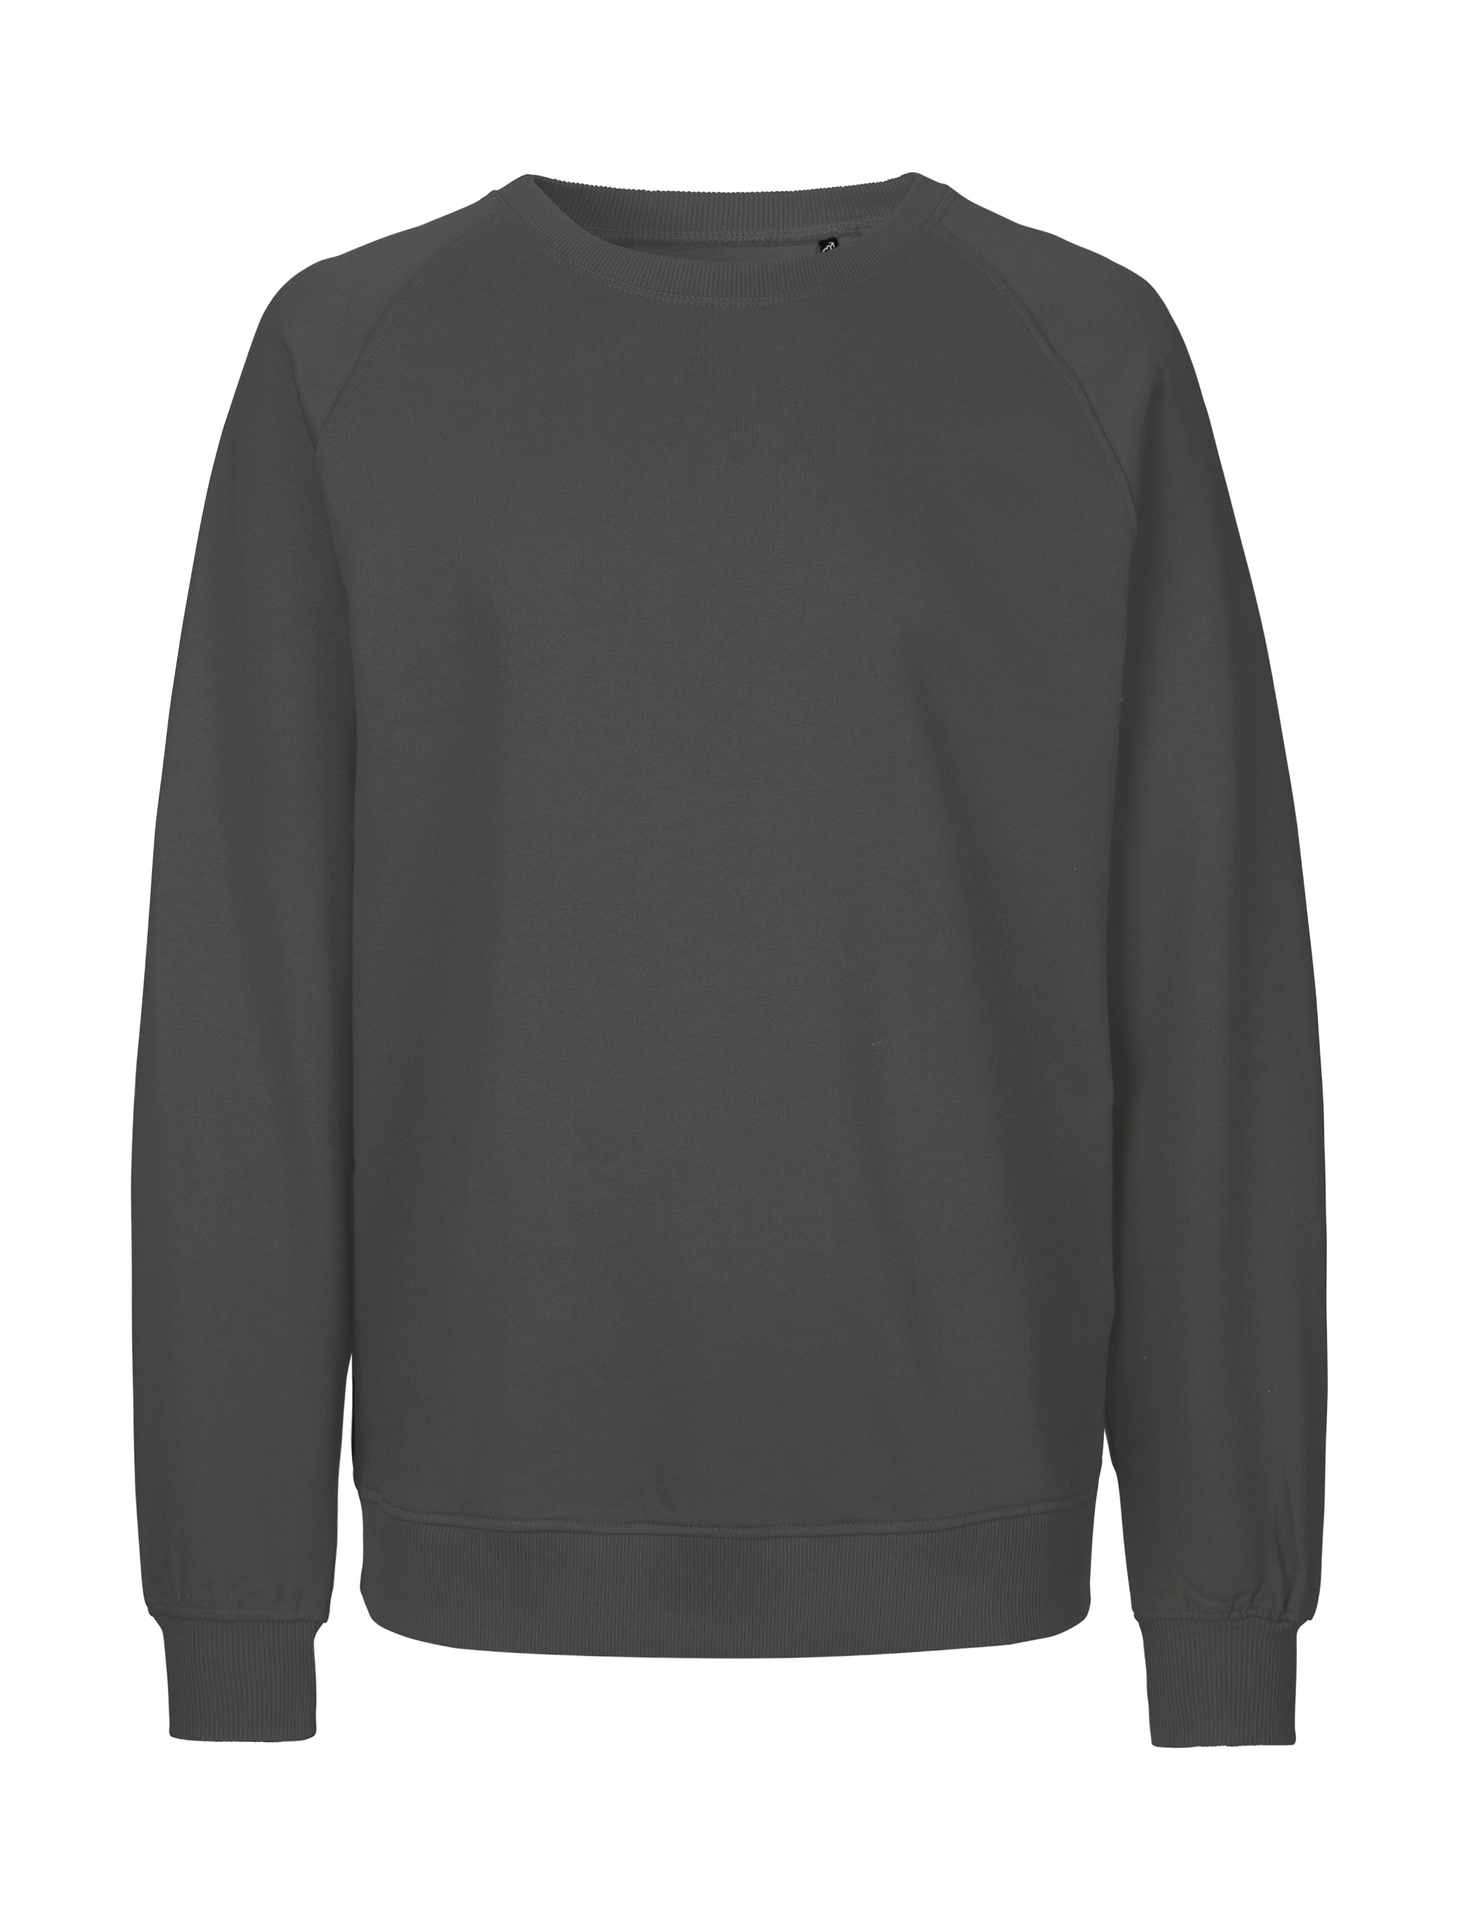 [PR/02691] Unisex Sweatshirt (Charcoal 06, L)